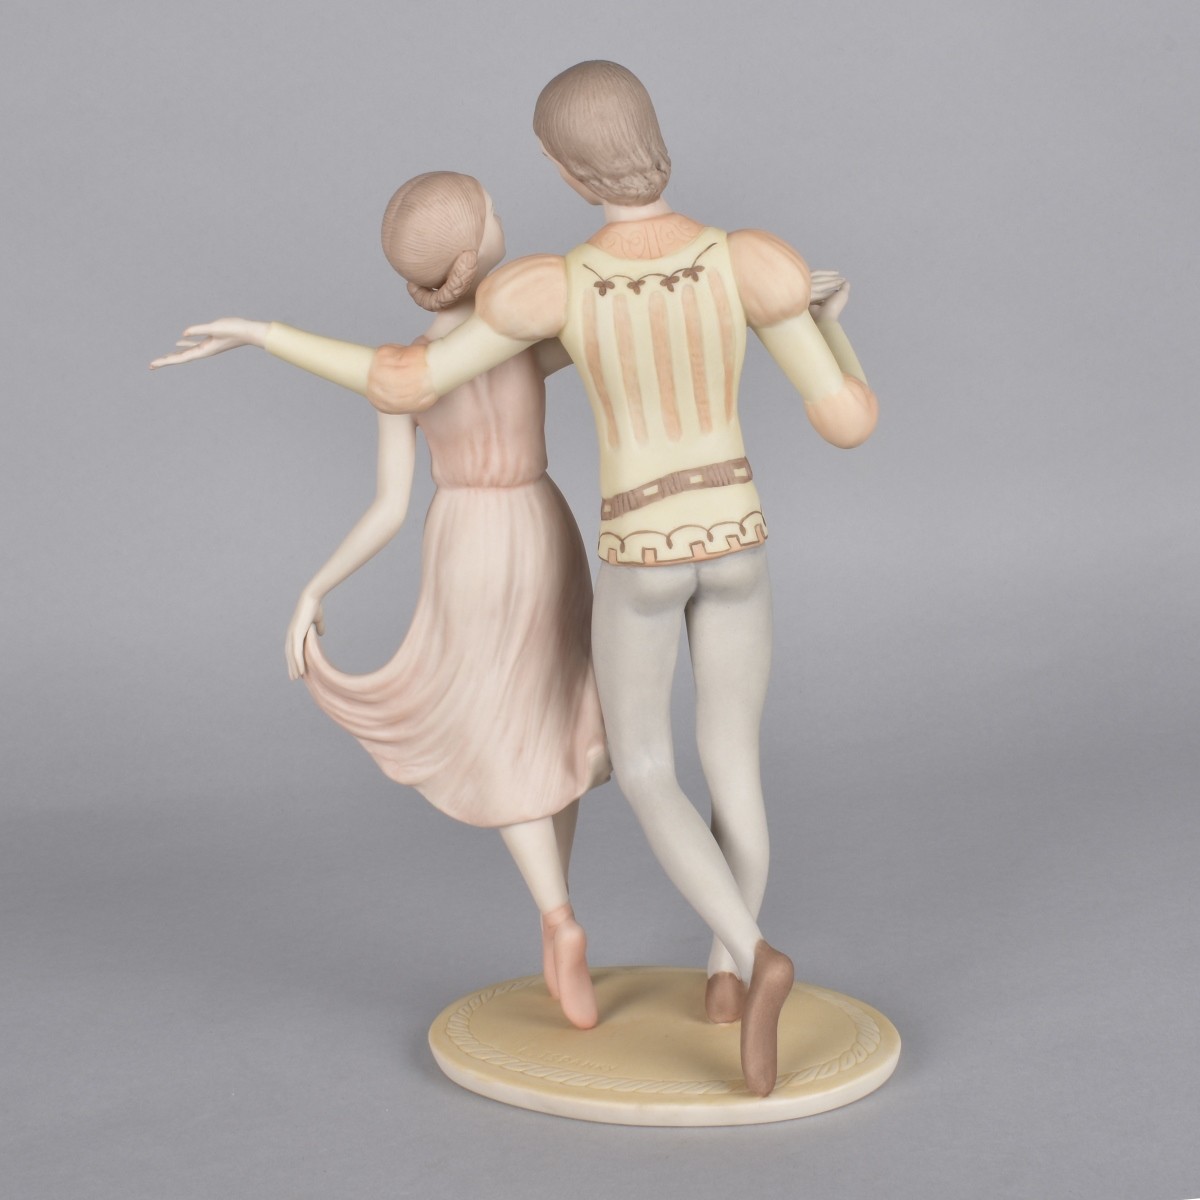 Ispanky Romeo and Juliet Ballet Figurine